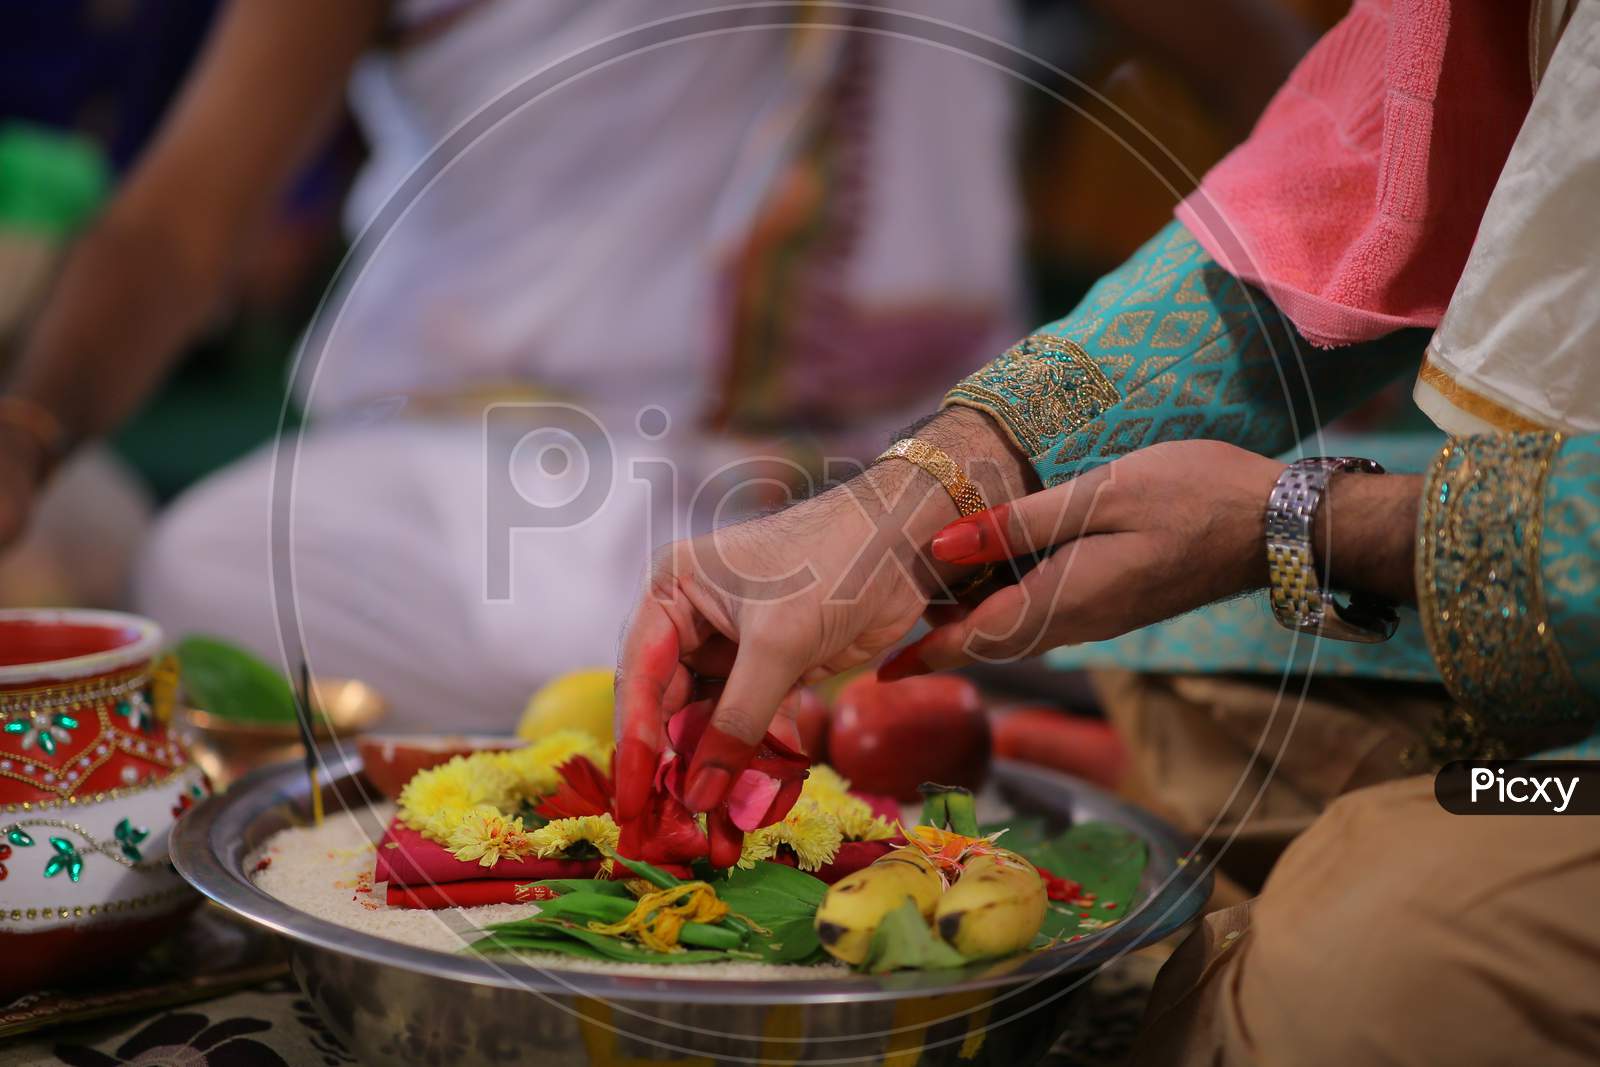 South Indian Wedding Traditions At an Hindu Wedding